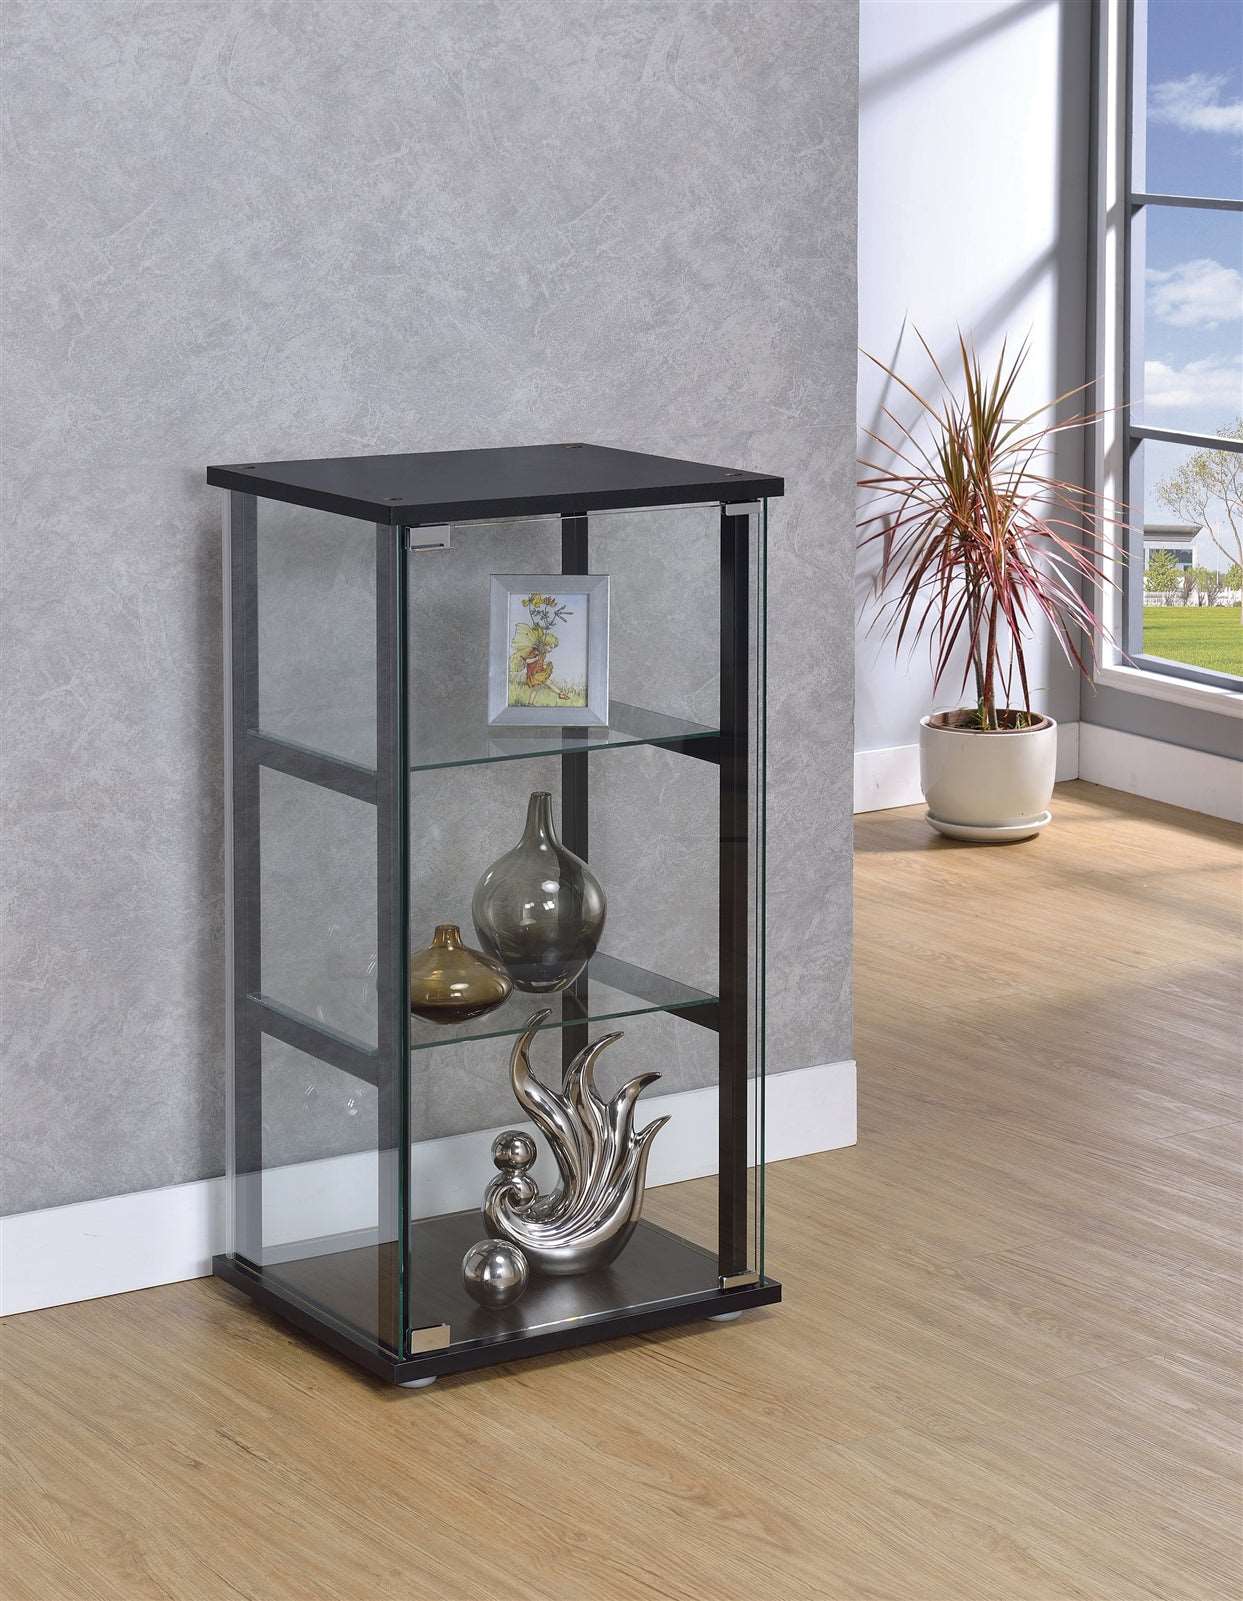 3-Shelf Glass Curio Cabinet Black And Clear